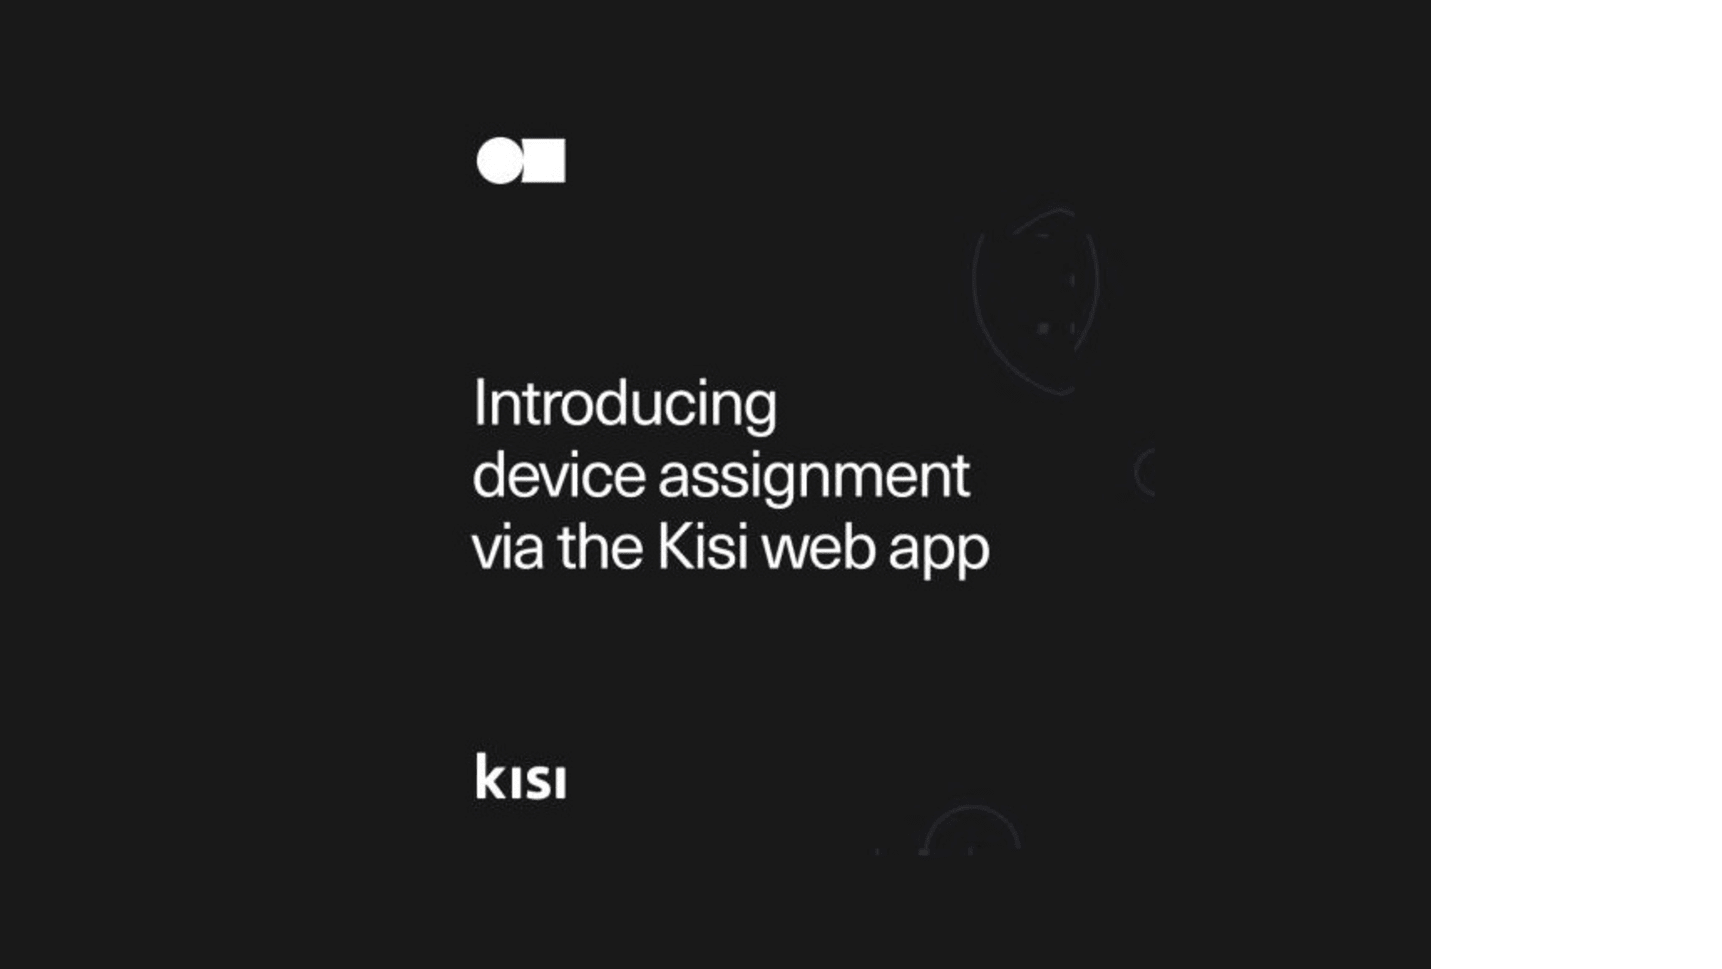 Device assignment via the Kisi web app